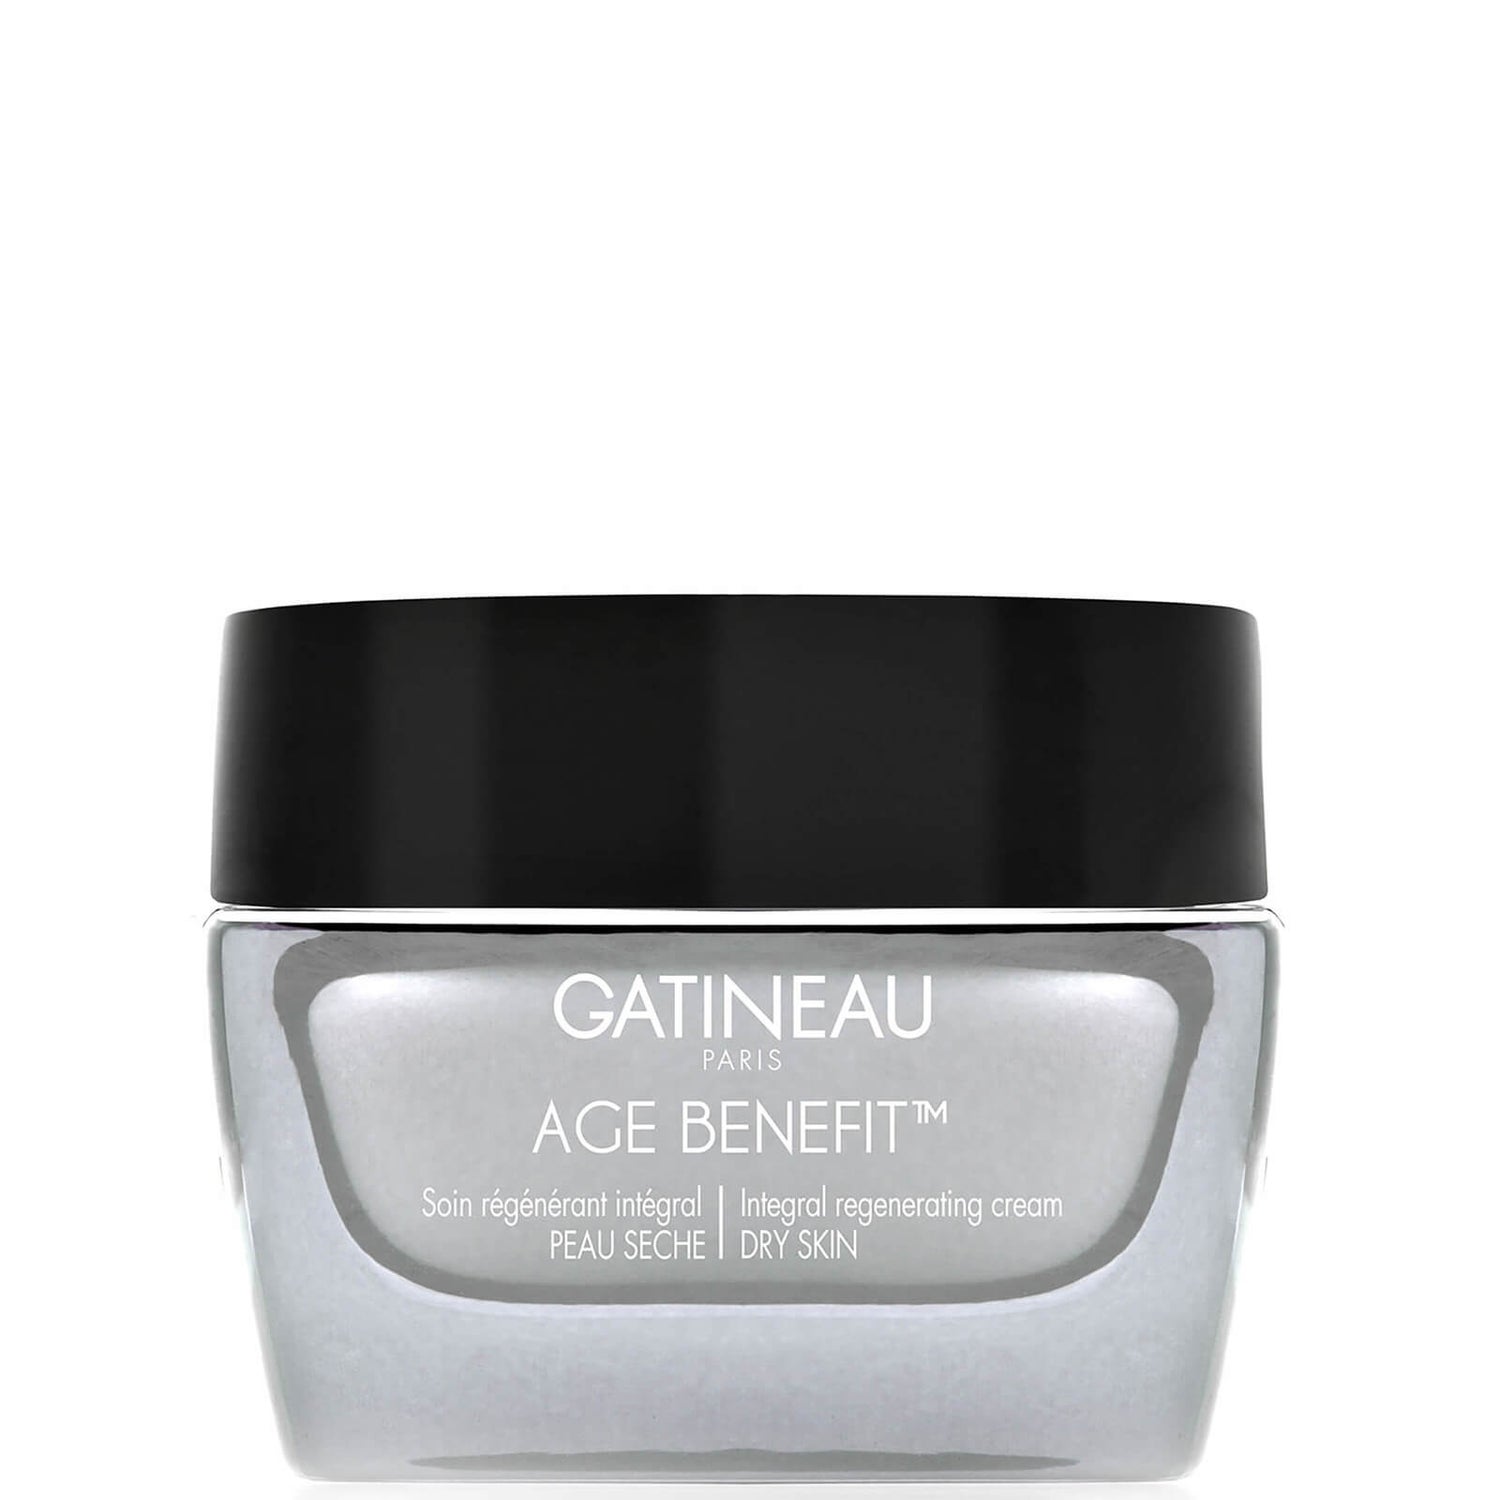 Восстанавливающий крем комплексного действия для сухой кожи Gatineau Age Benefit Integral Regenerating Cream — Dry Skin 50 мл